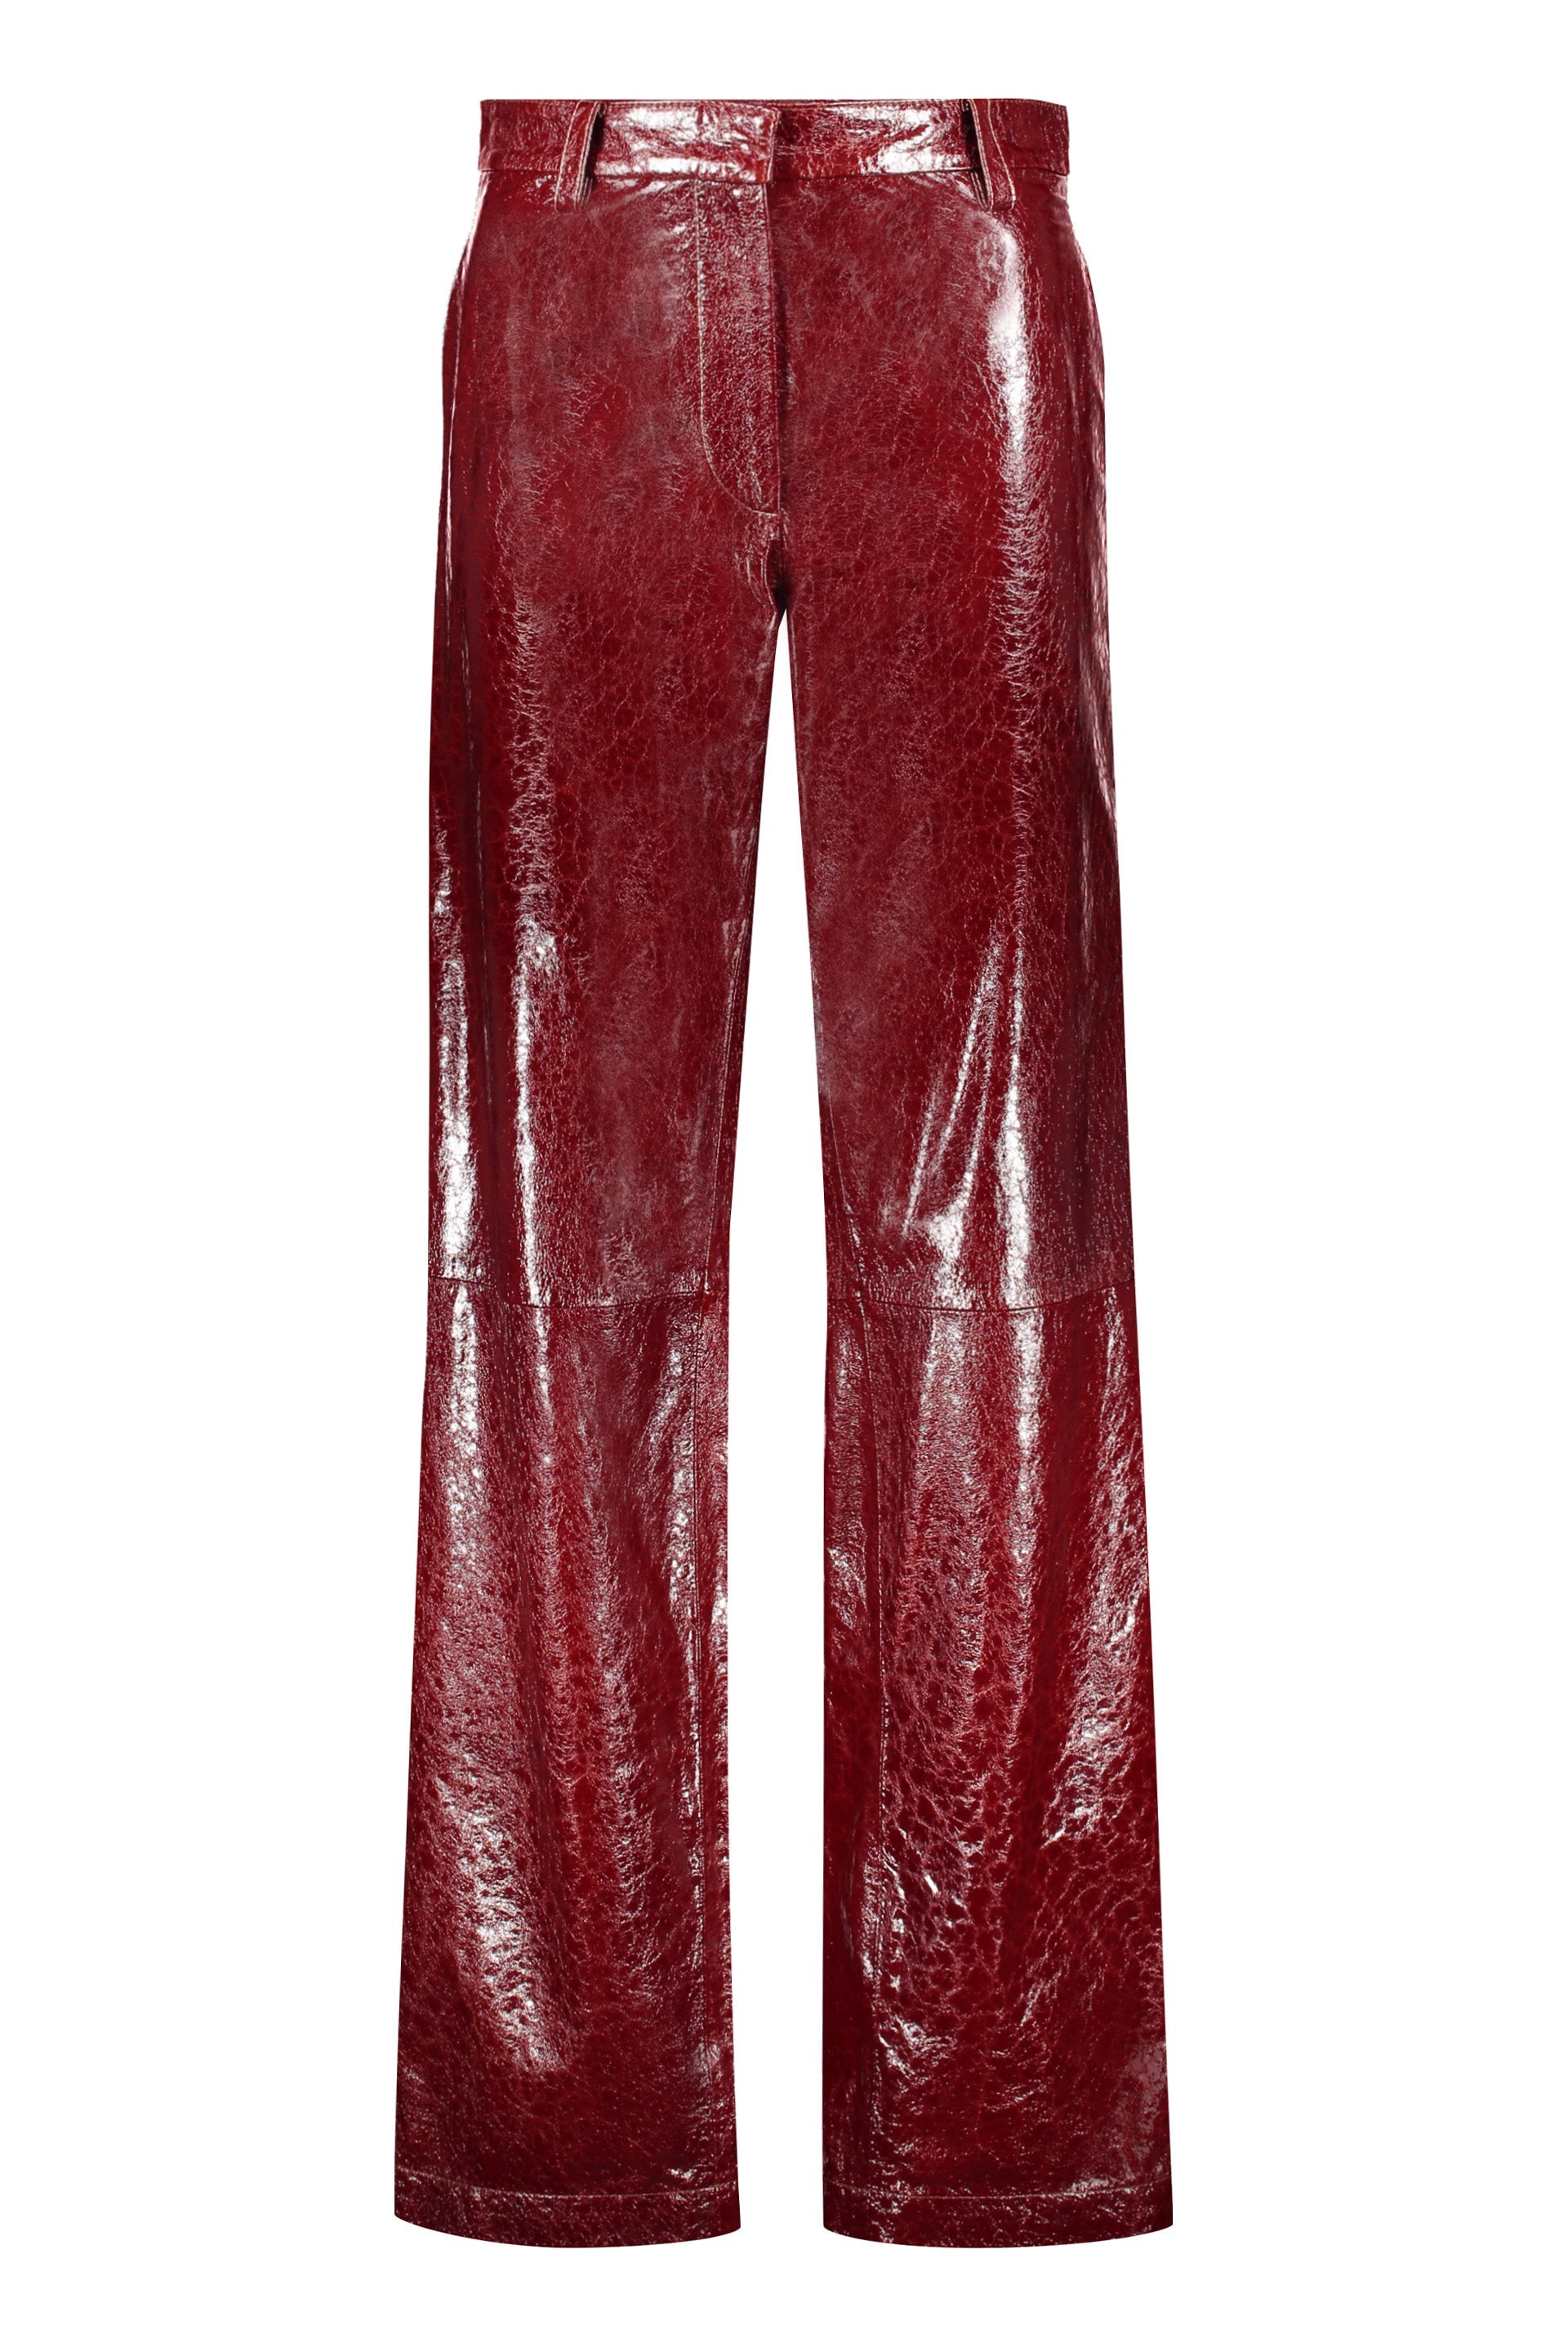 Missoni-OUTLET-SALE-Leather-pants-Hosen-42-ARCHIVE-COLLECTION.jpg